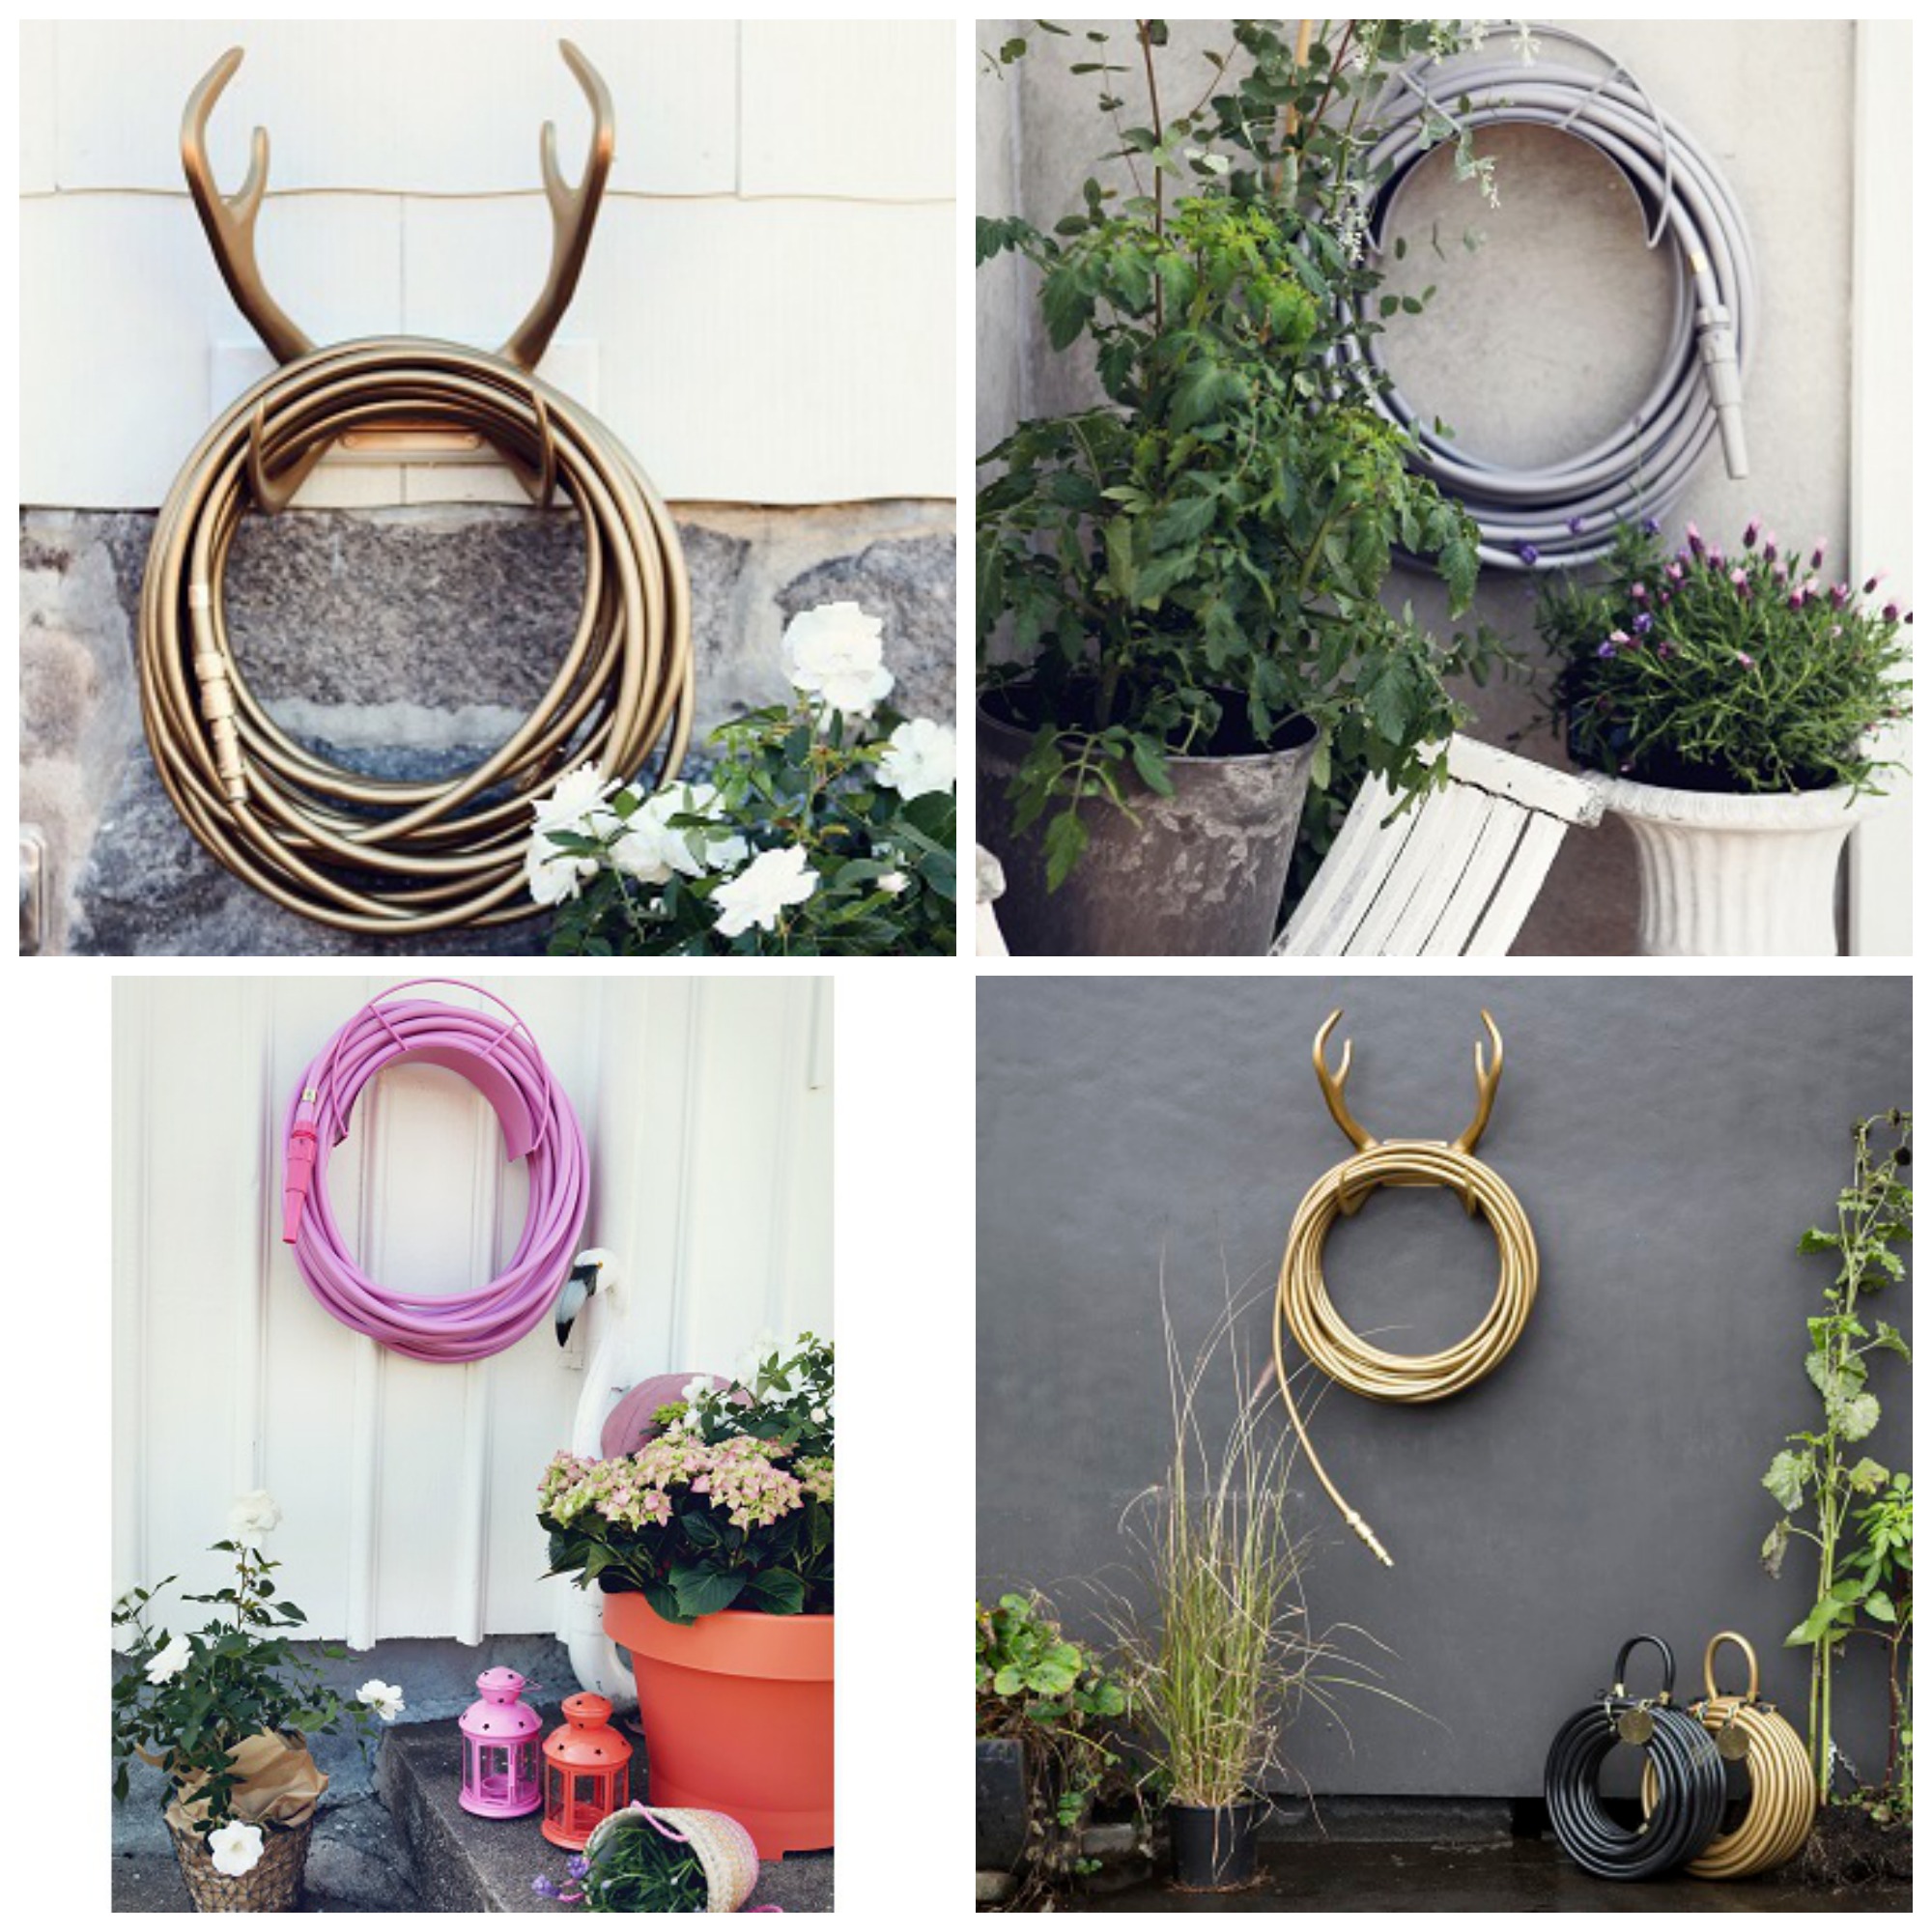 designer garden hoses from Swedish company garden glory